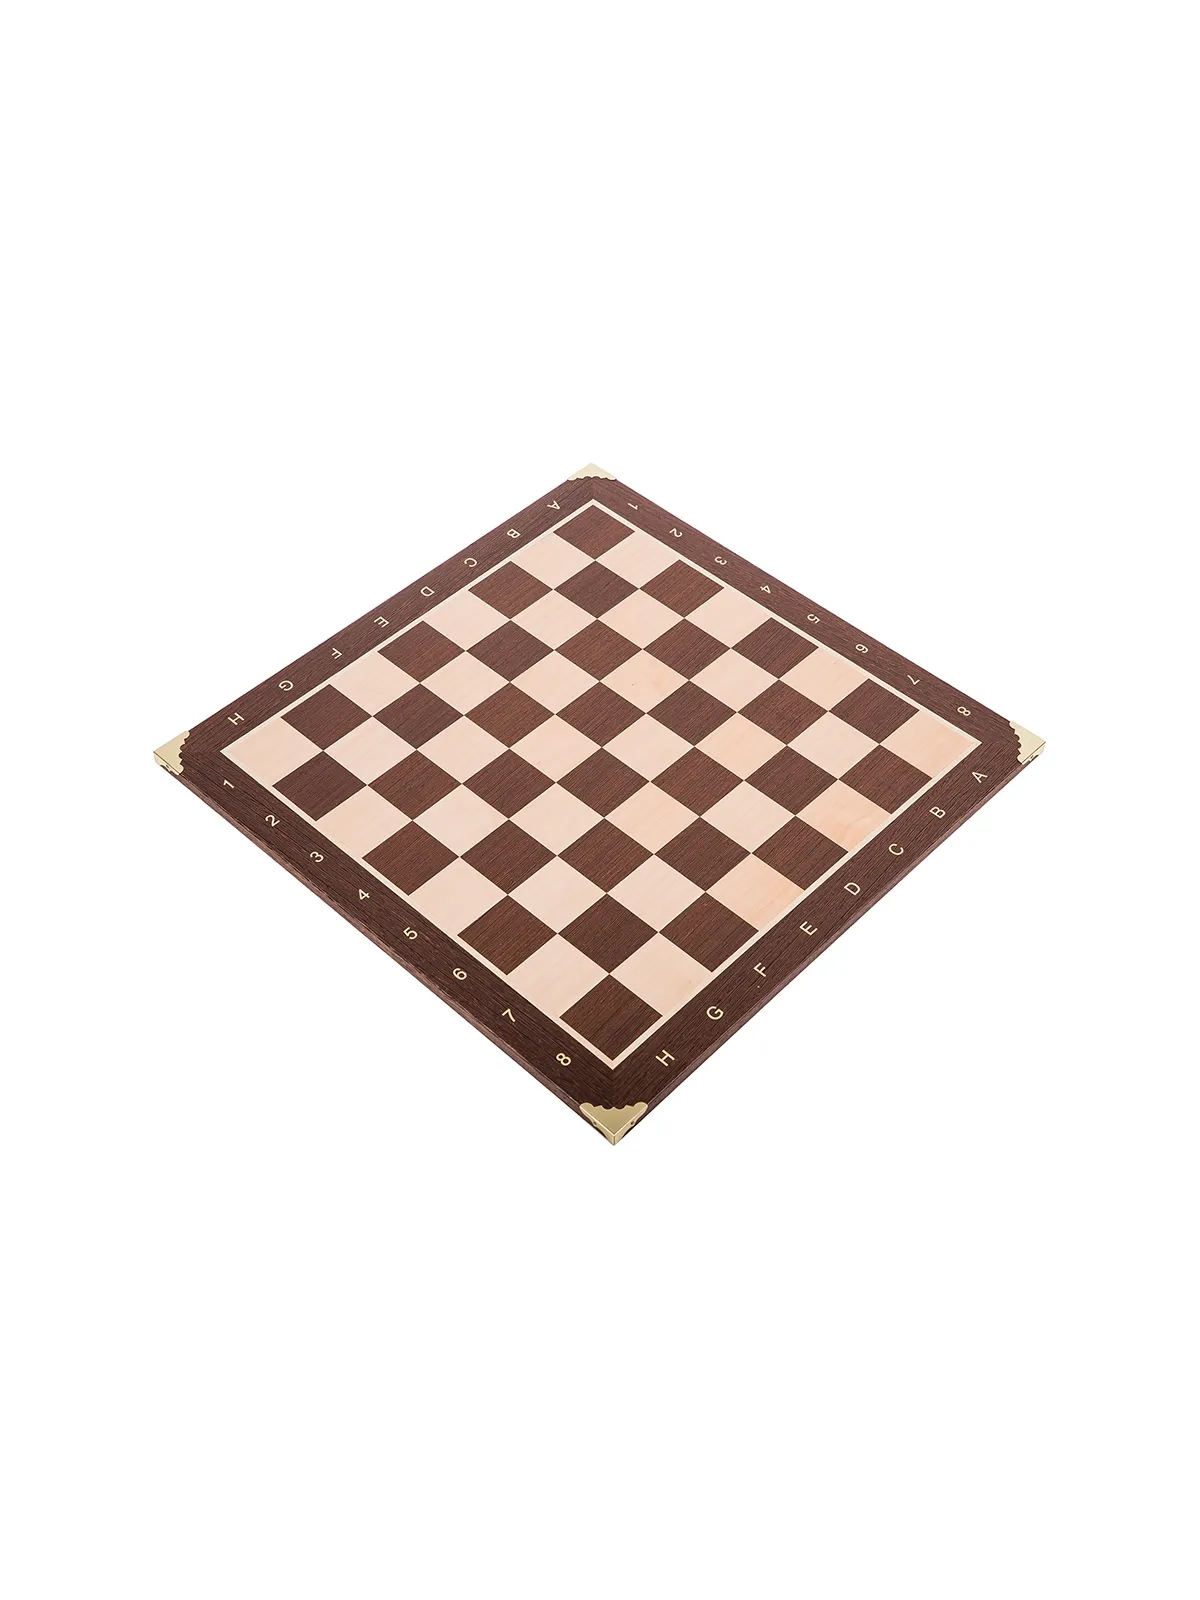 Chessboard No. 5 - Sweden